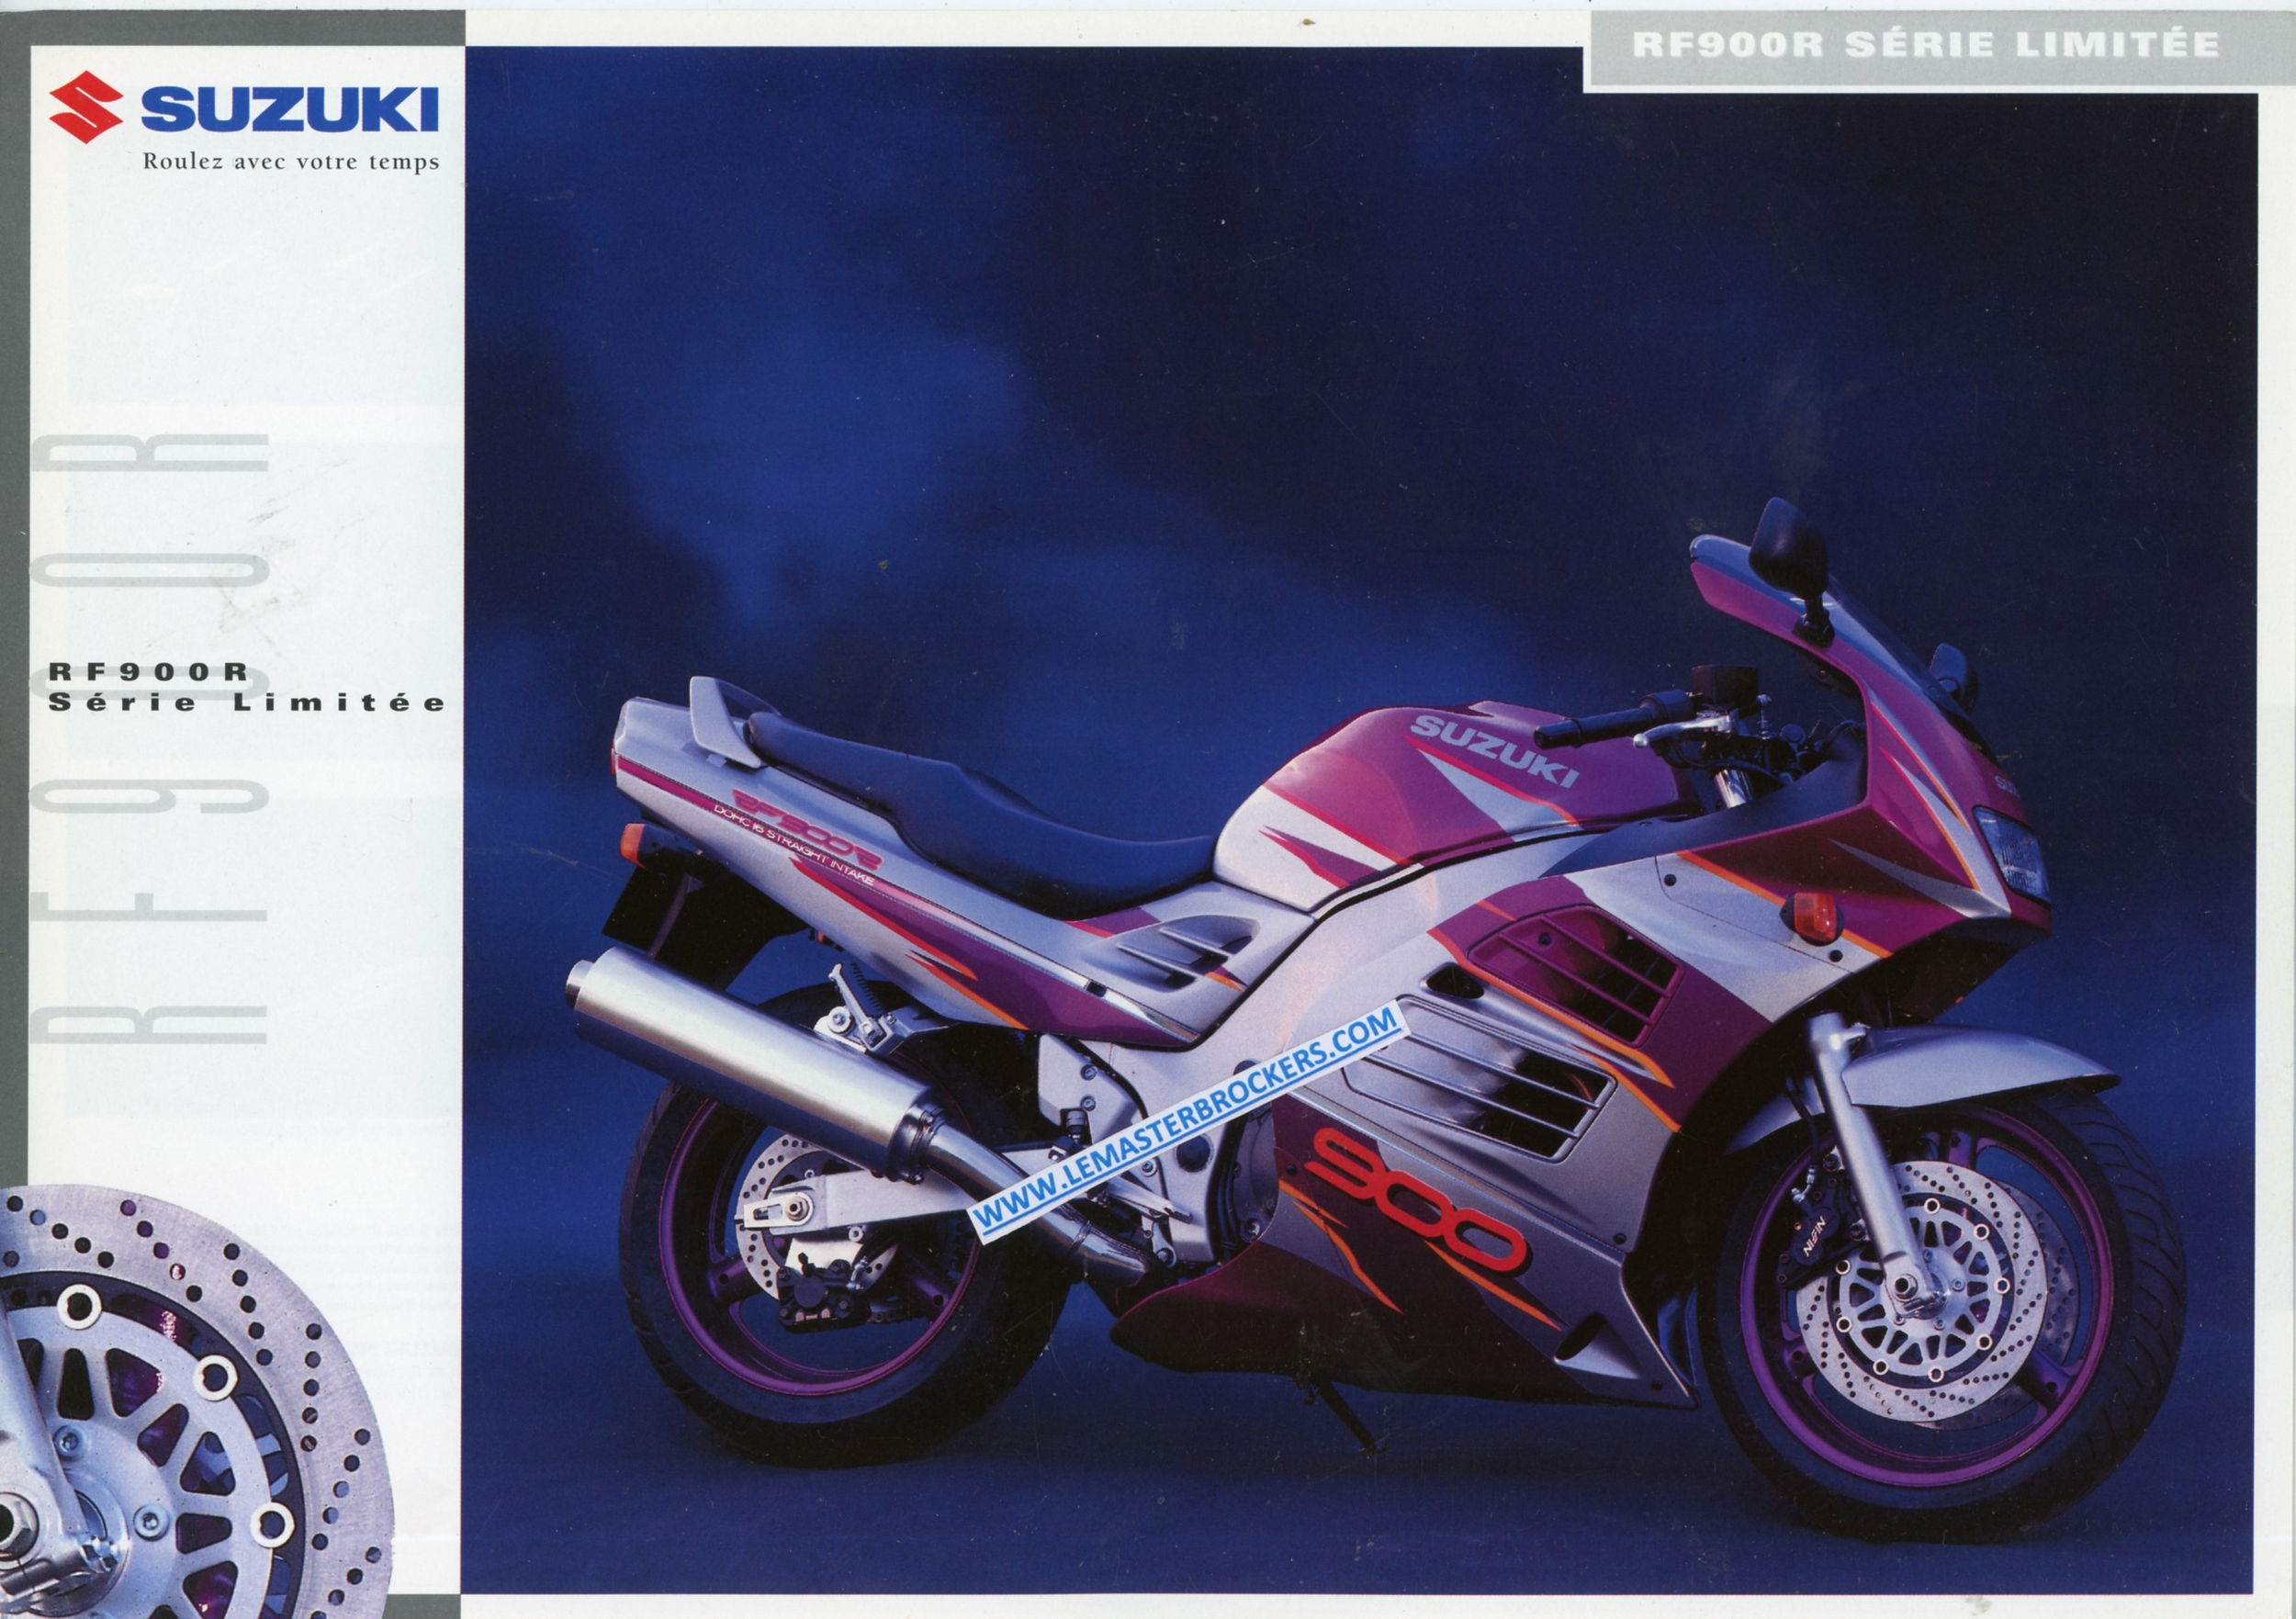 PROSPECTUS-MOTO-SUZUKI-RS900R-SERIE-LIMITEE-LEMASTERBROCKERS-BROCHURE-MOTOCYCLES